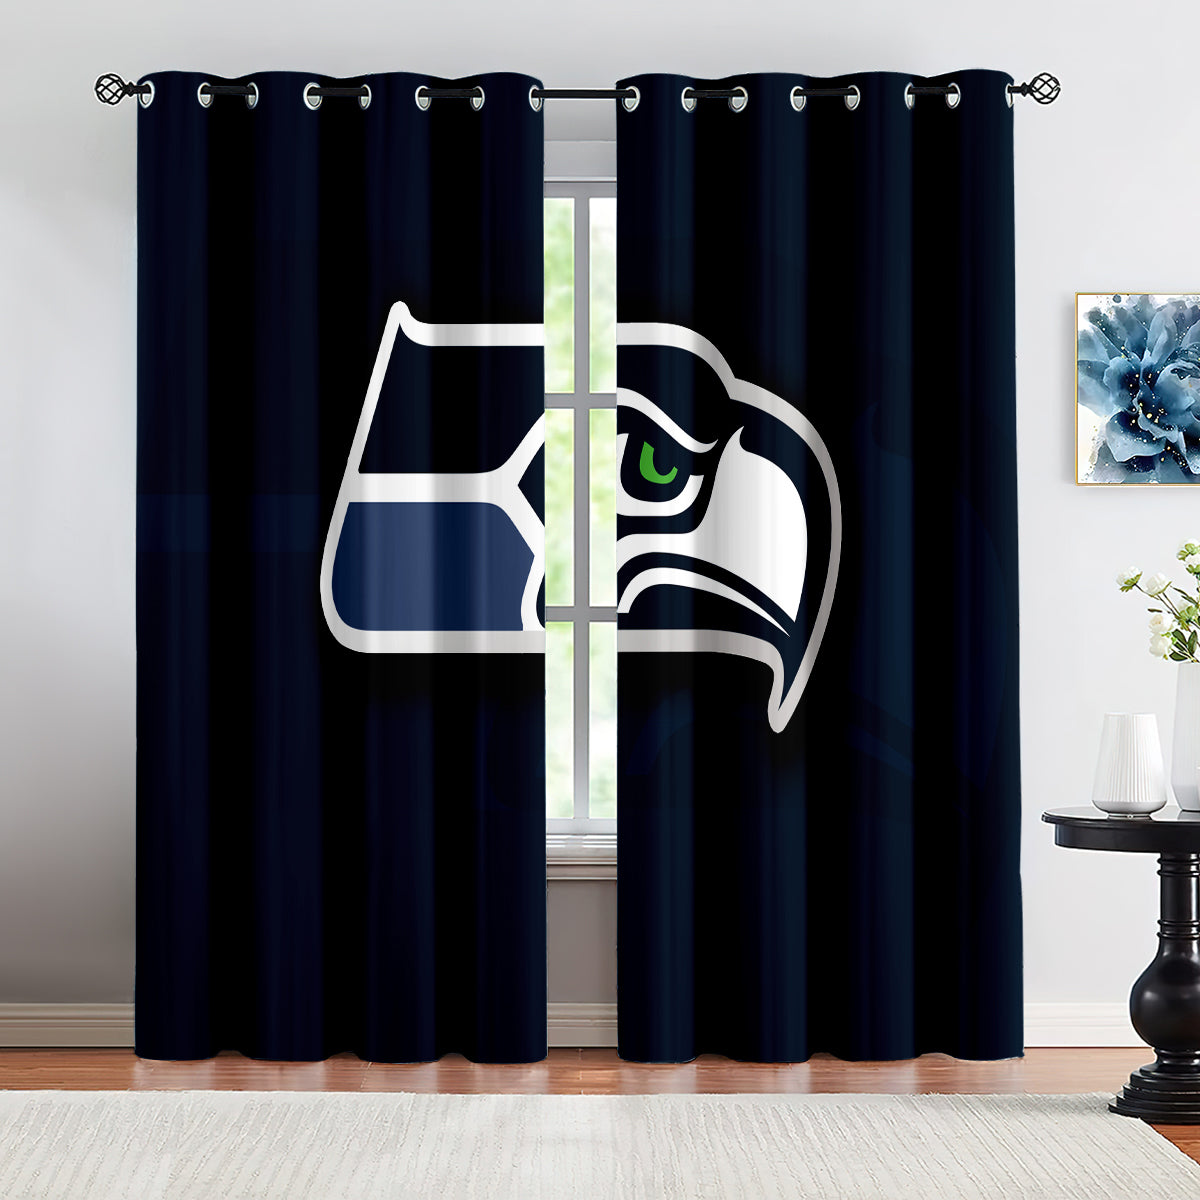 Seattle Seahawks Football Team Blackout Curtains Drape For Window Treatment Set